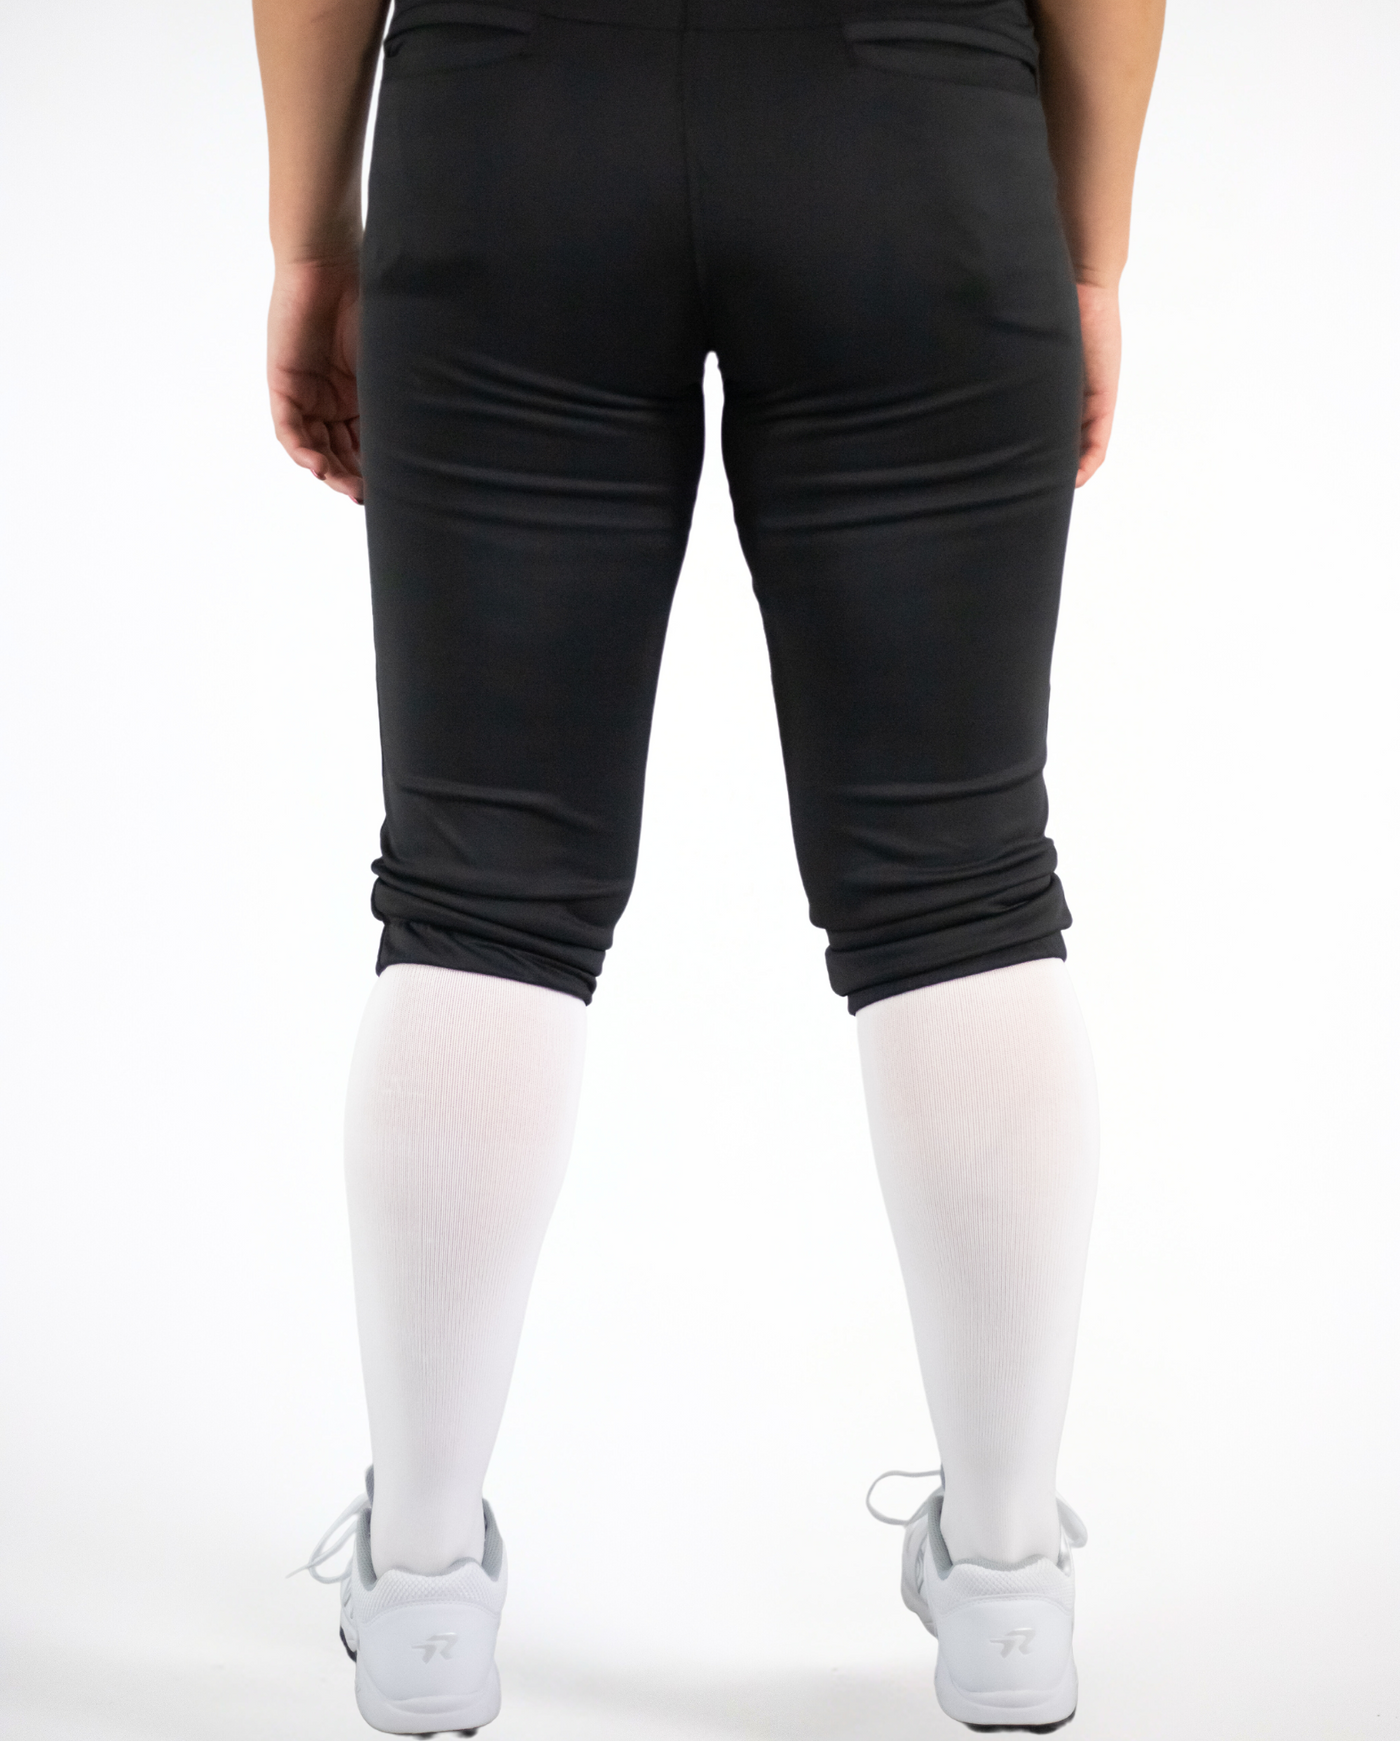 Women's Revolution Softball Pants - Athletic Fit